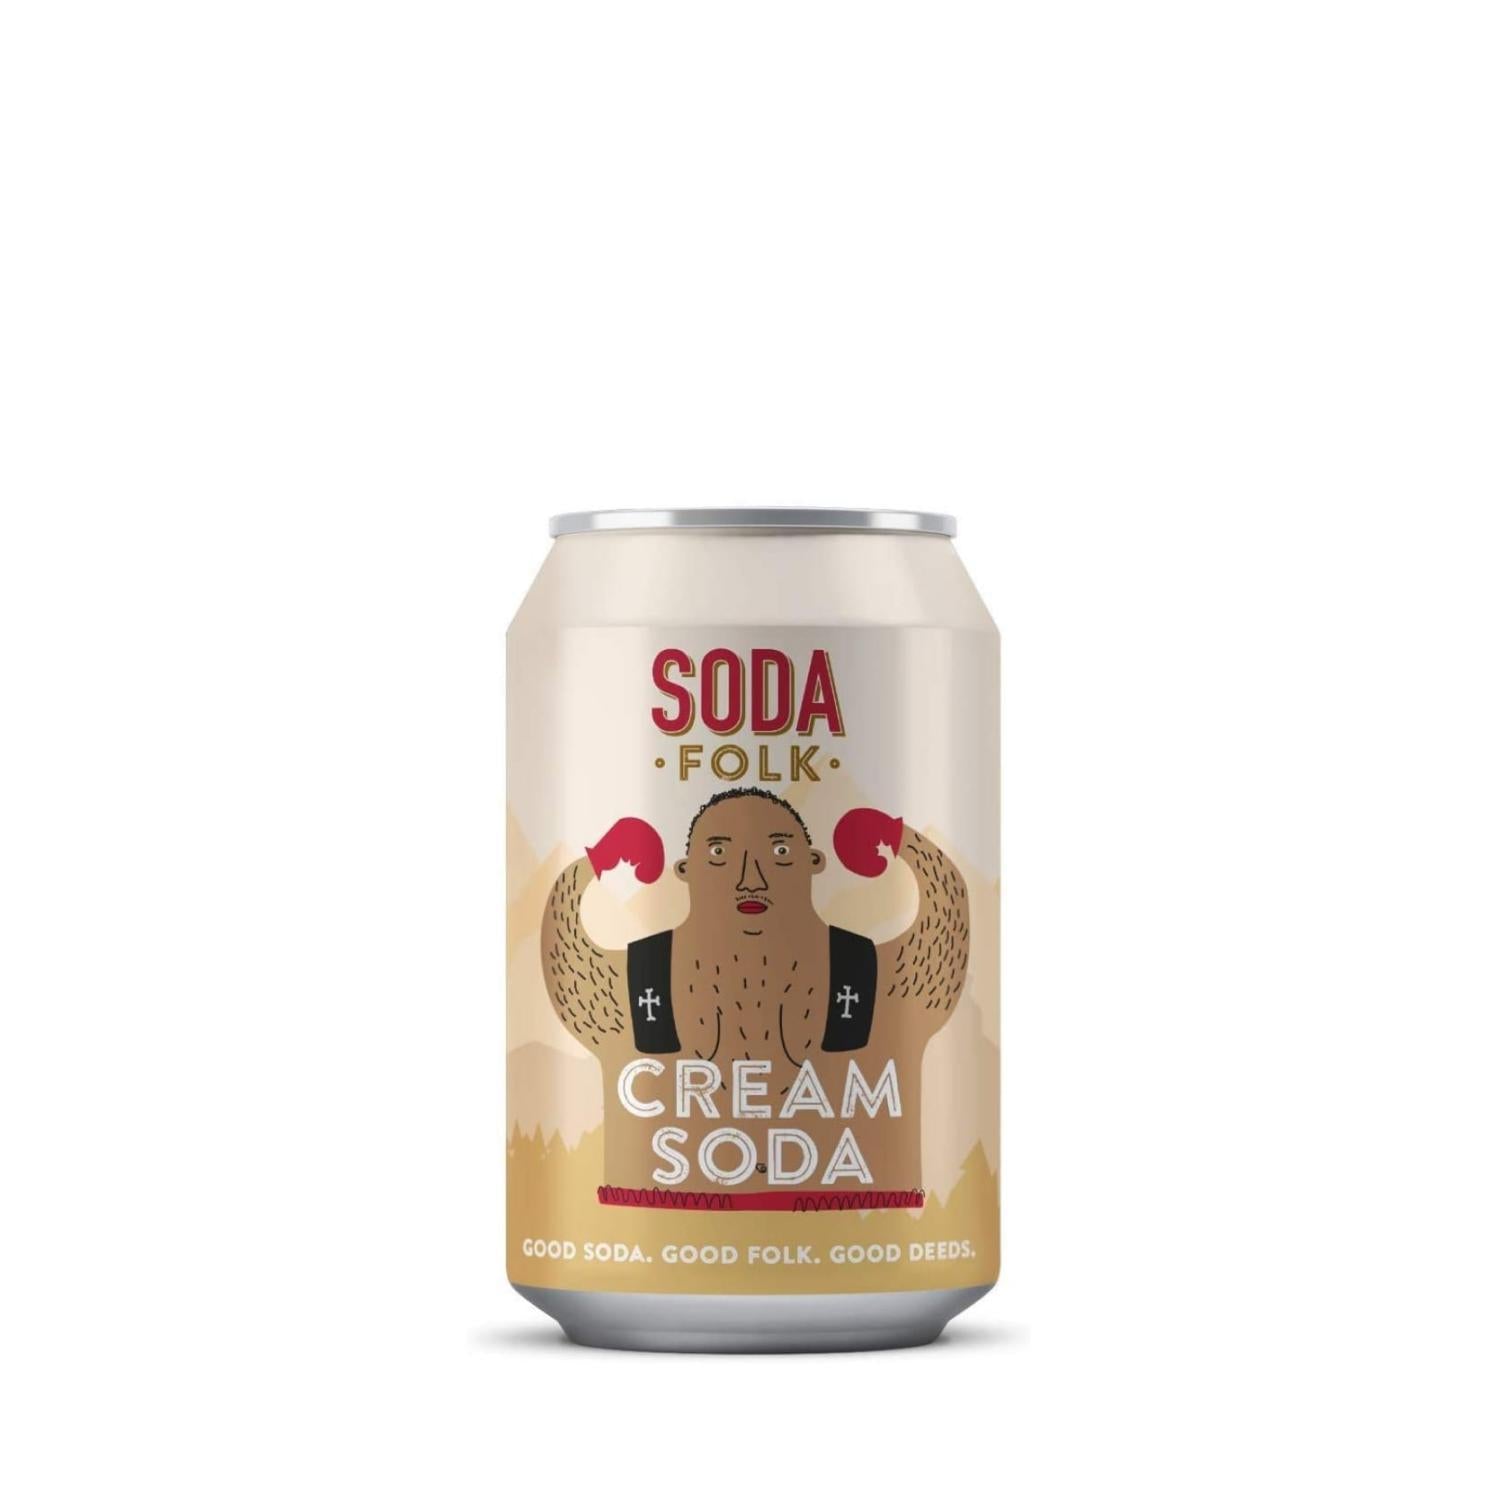 Soda Folk - Cream Soda